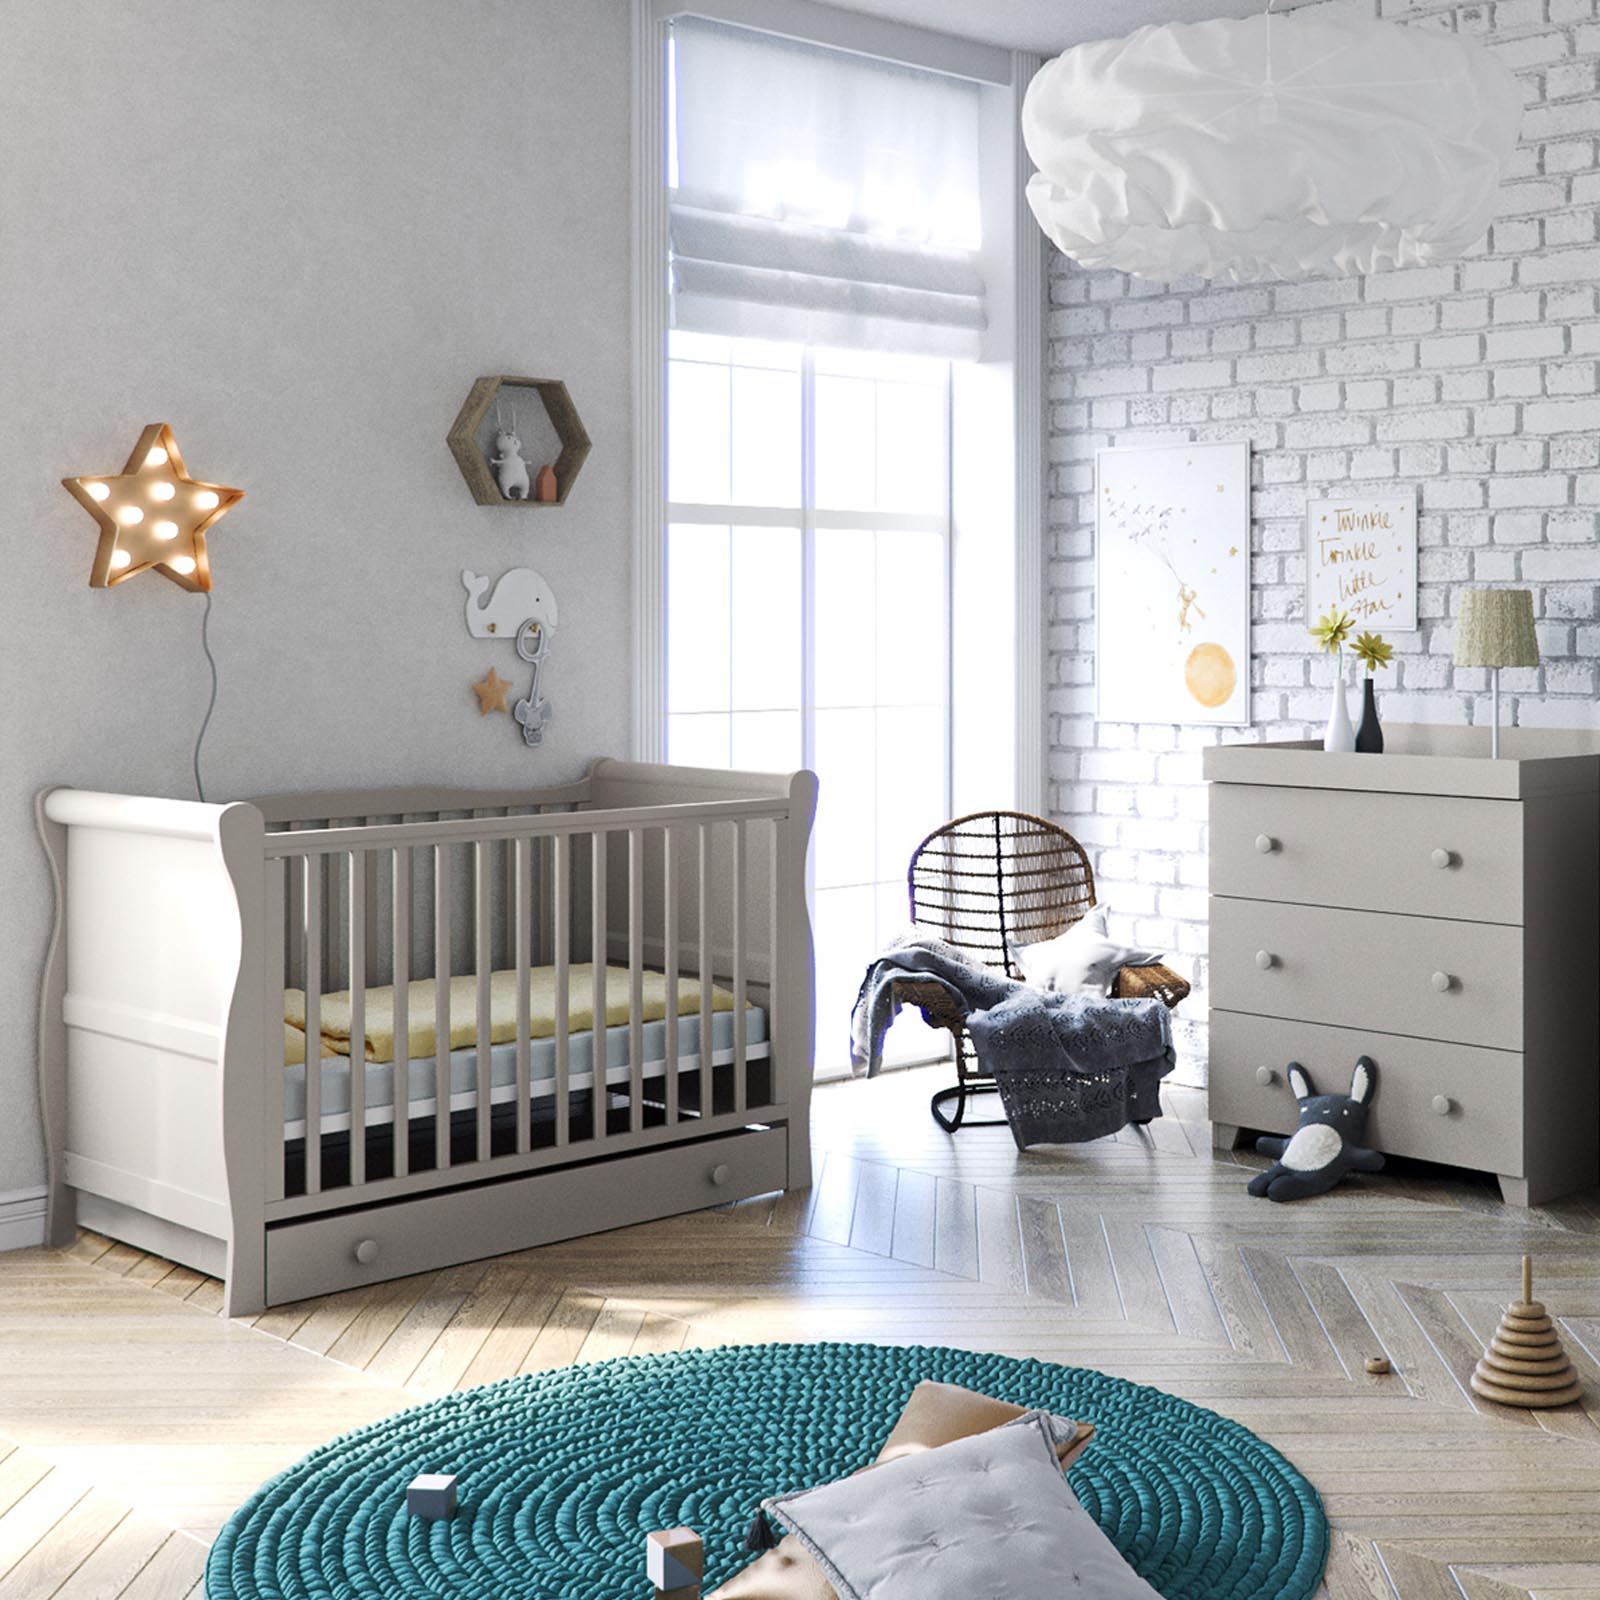 grey baby furniture sets